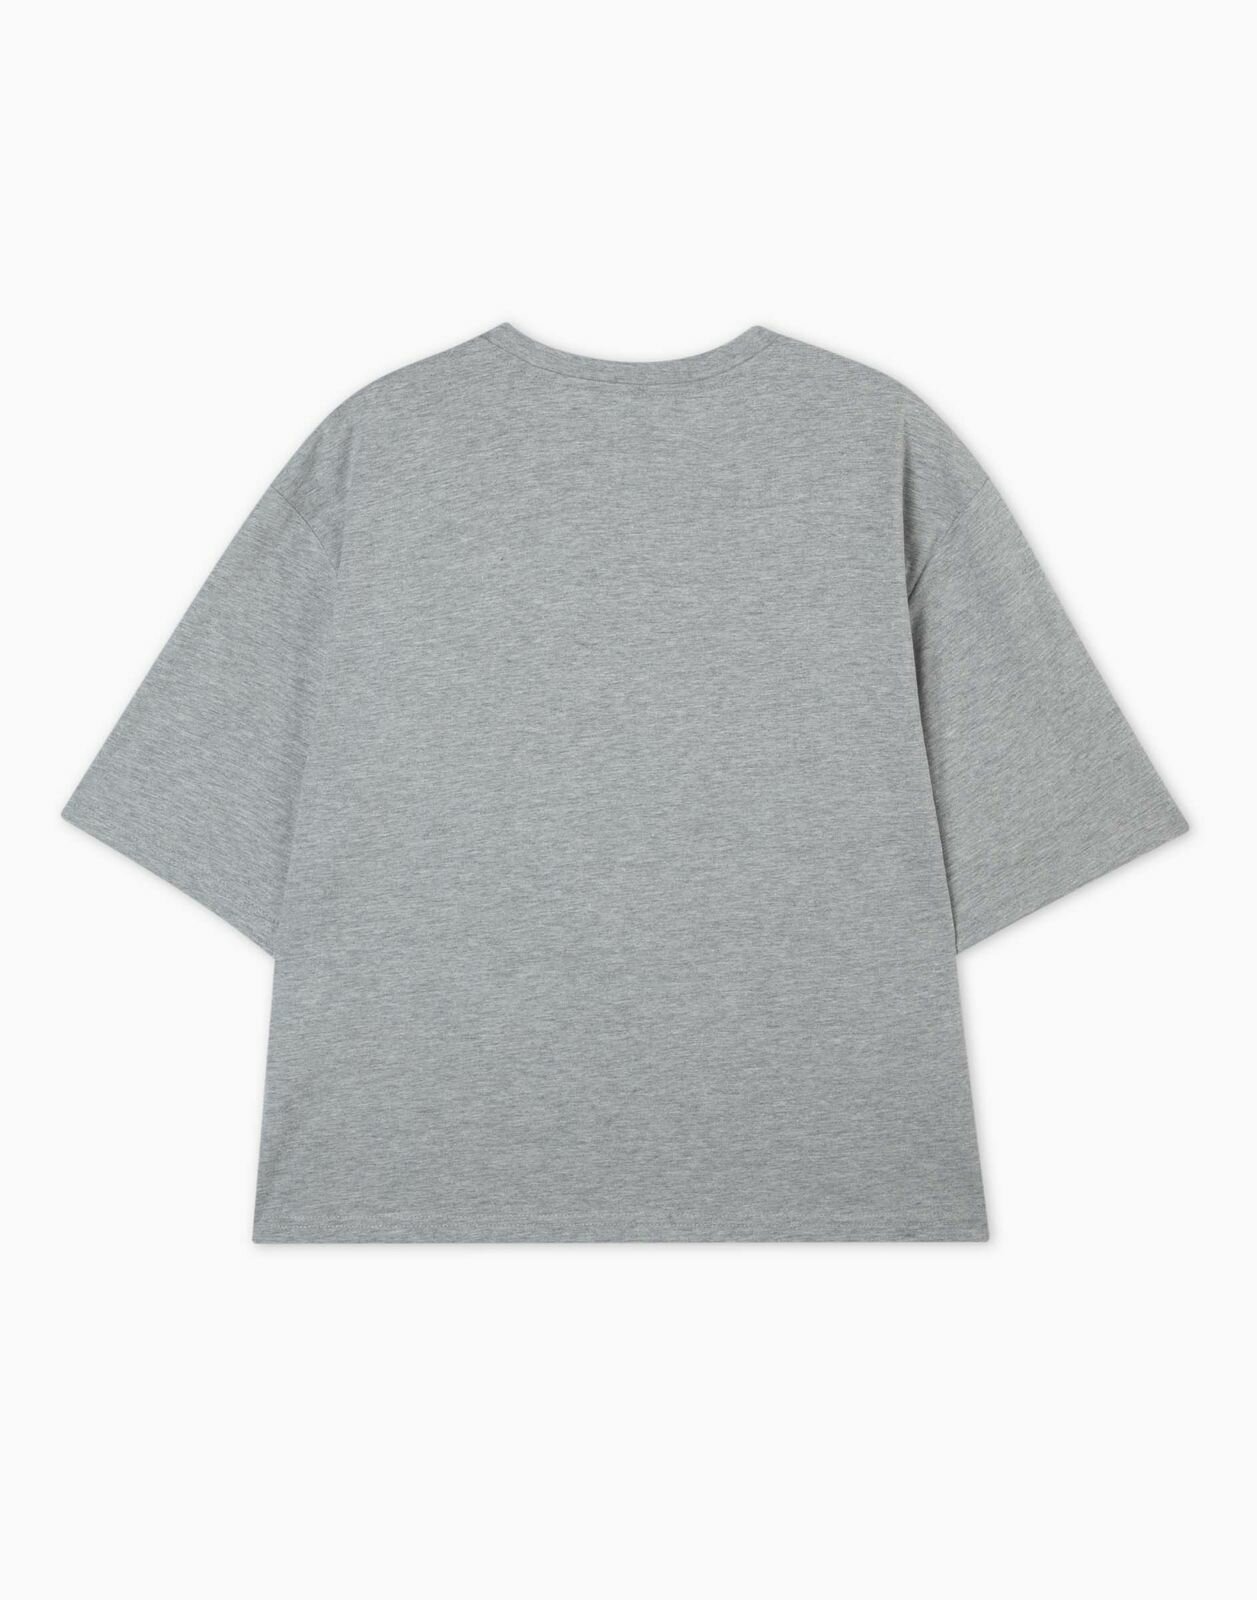 Пижамная футболка Gloria Jeans GSL001556 серый меланж женский XL (48) - фотография № 2